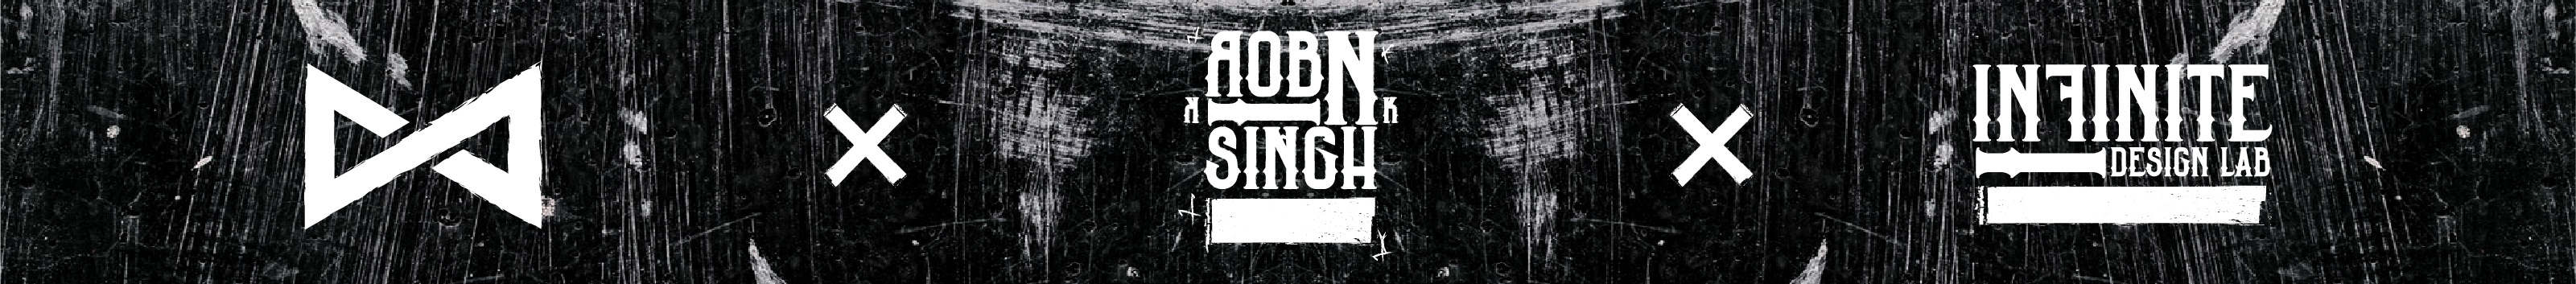 ROBIN SINGH's profile banner